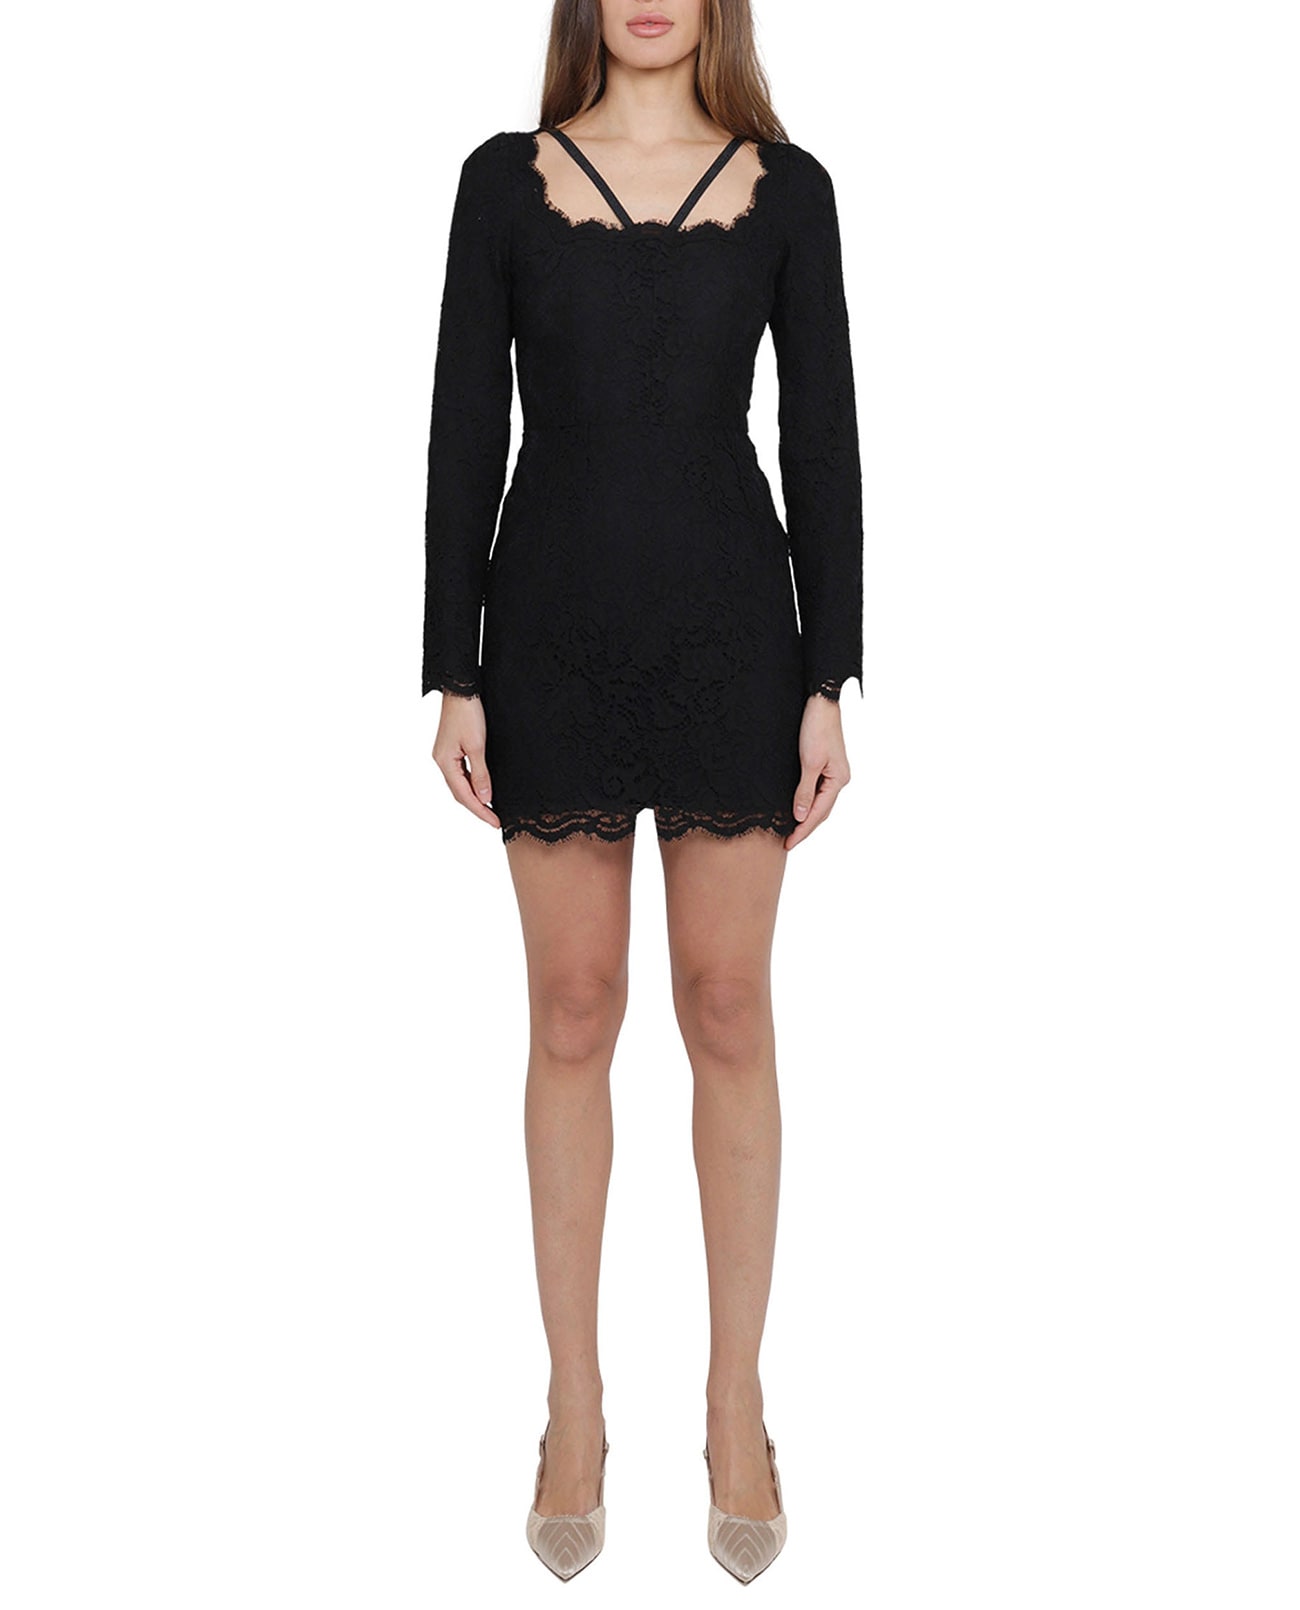 Dolce & Gabbana Black Lace Dress Ls